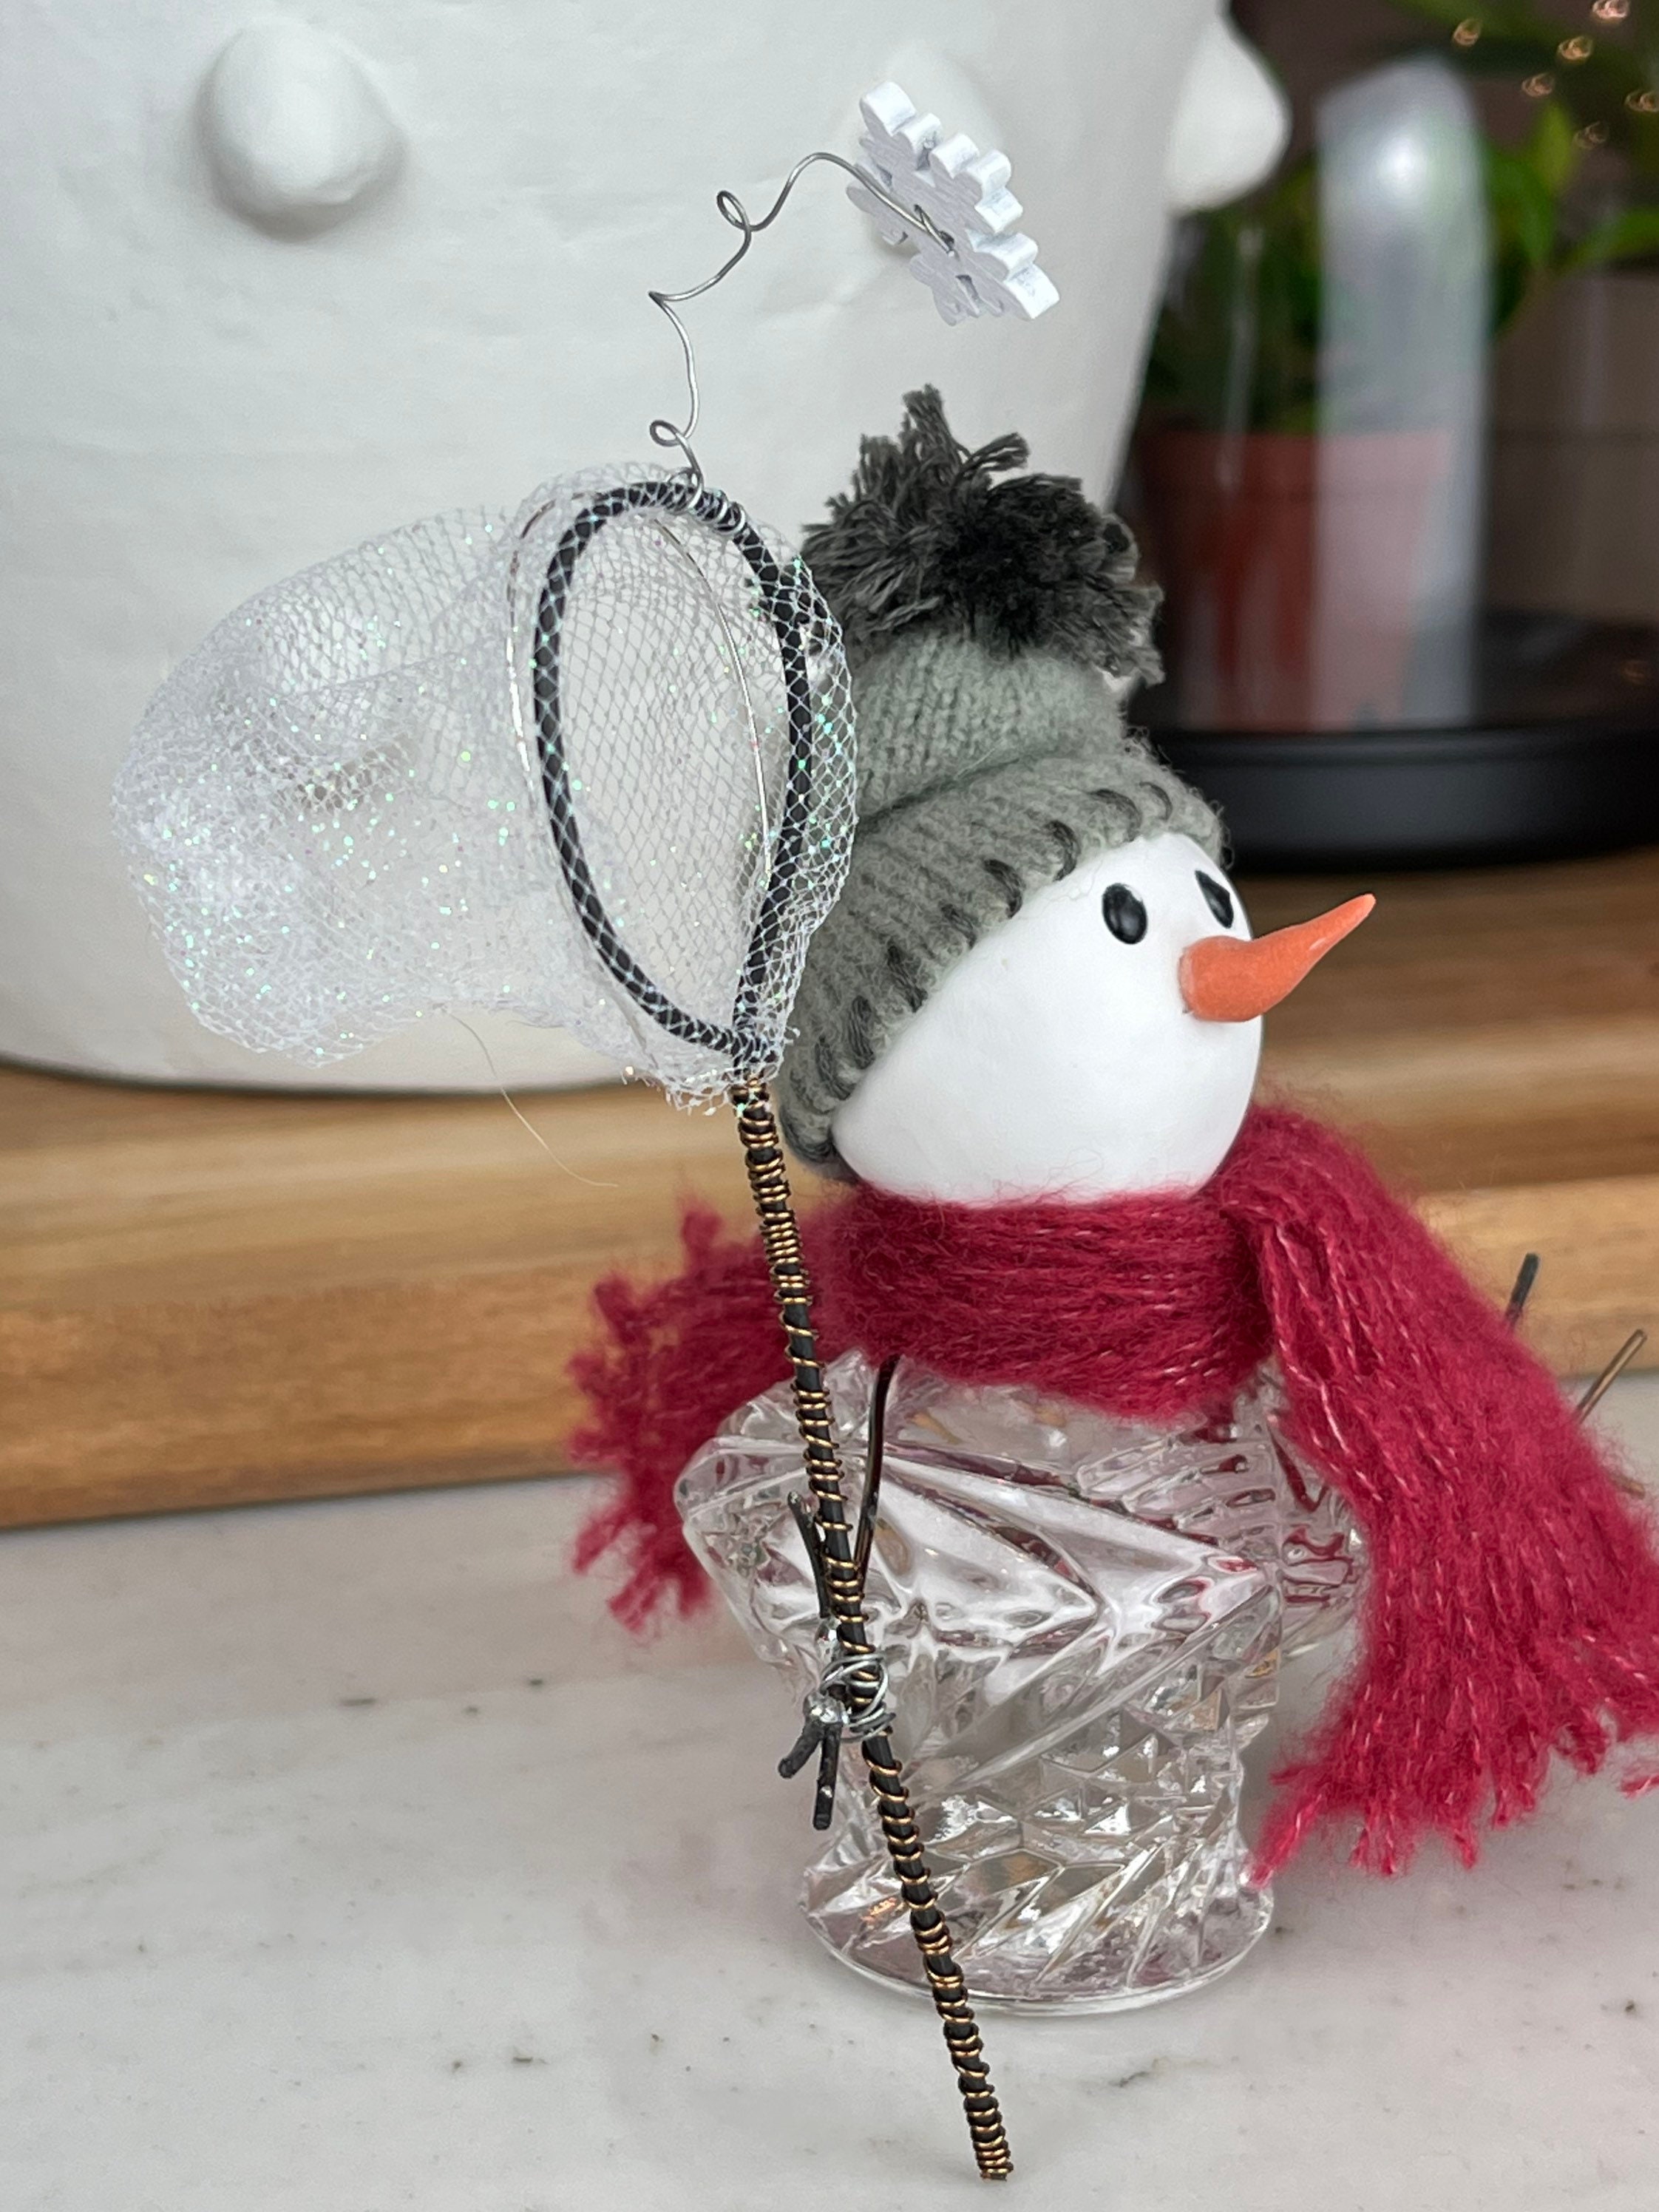 Saltshaker Snowman Figurine - Christmas Home Gift - Snowman Decor